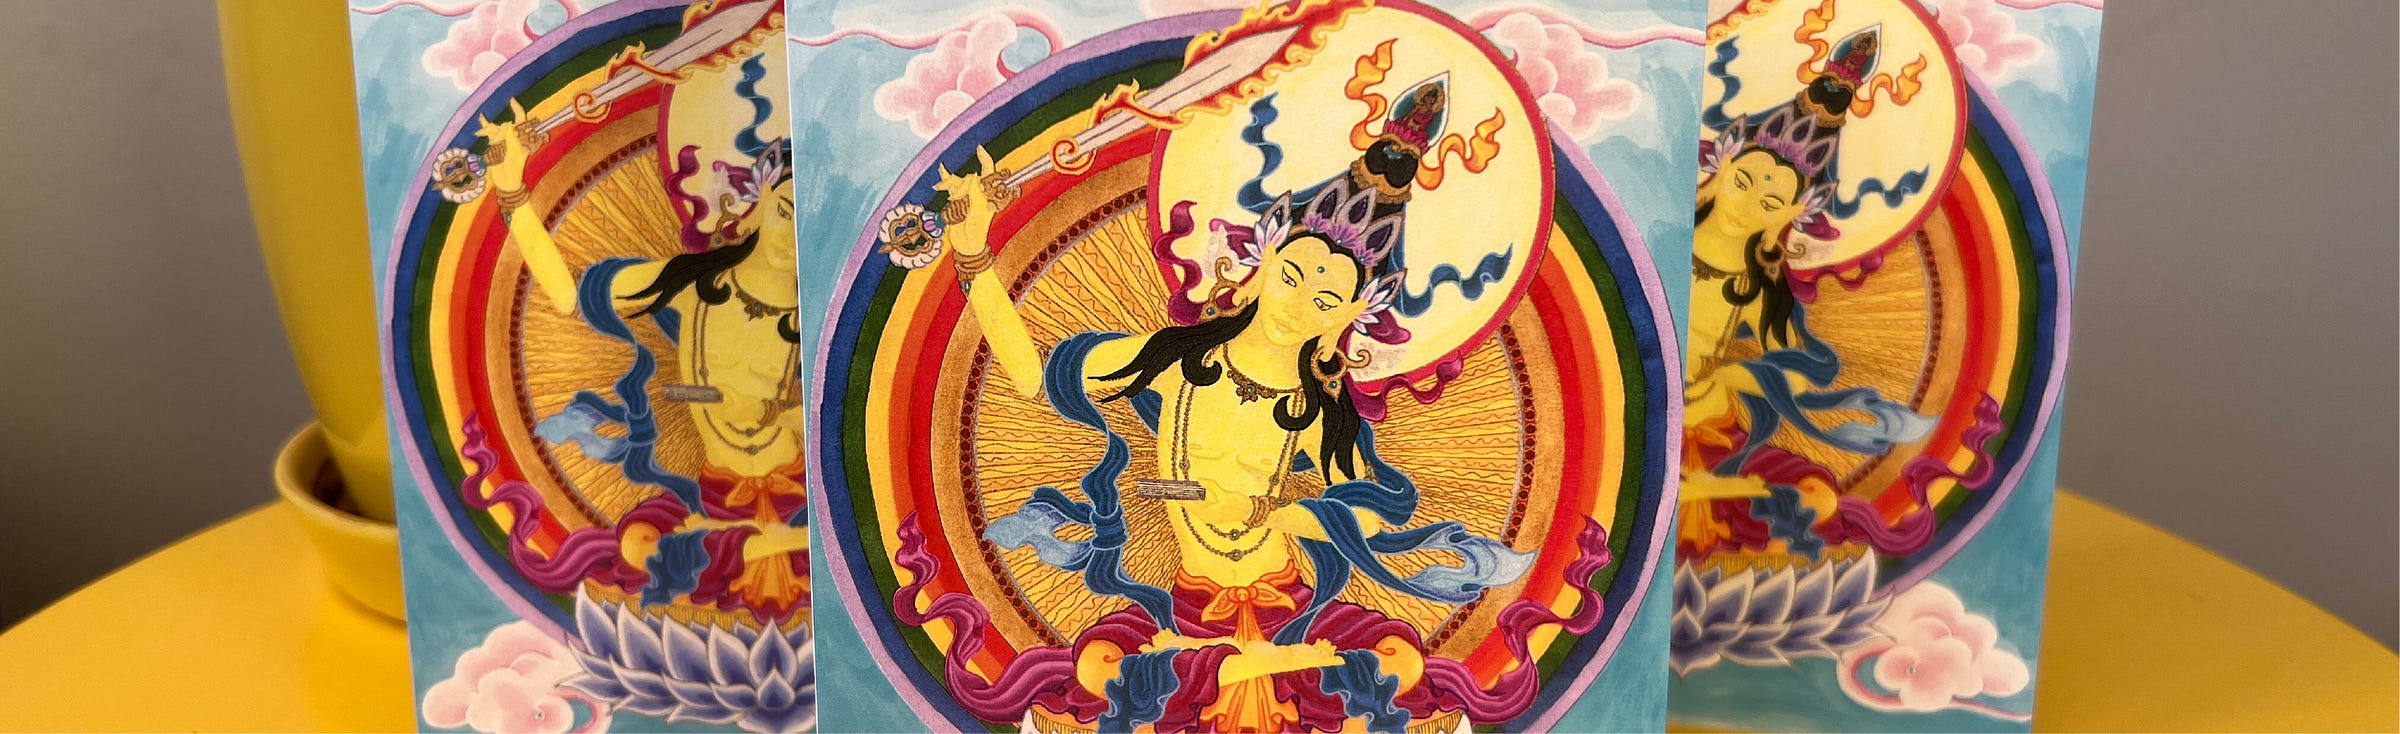 Photo of three greeting cards with a vibrant image of the Bodhisattva Manjushri printed on them. 